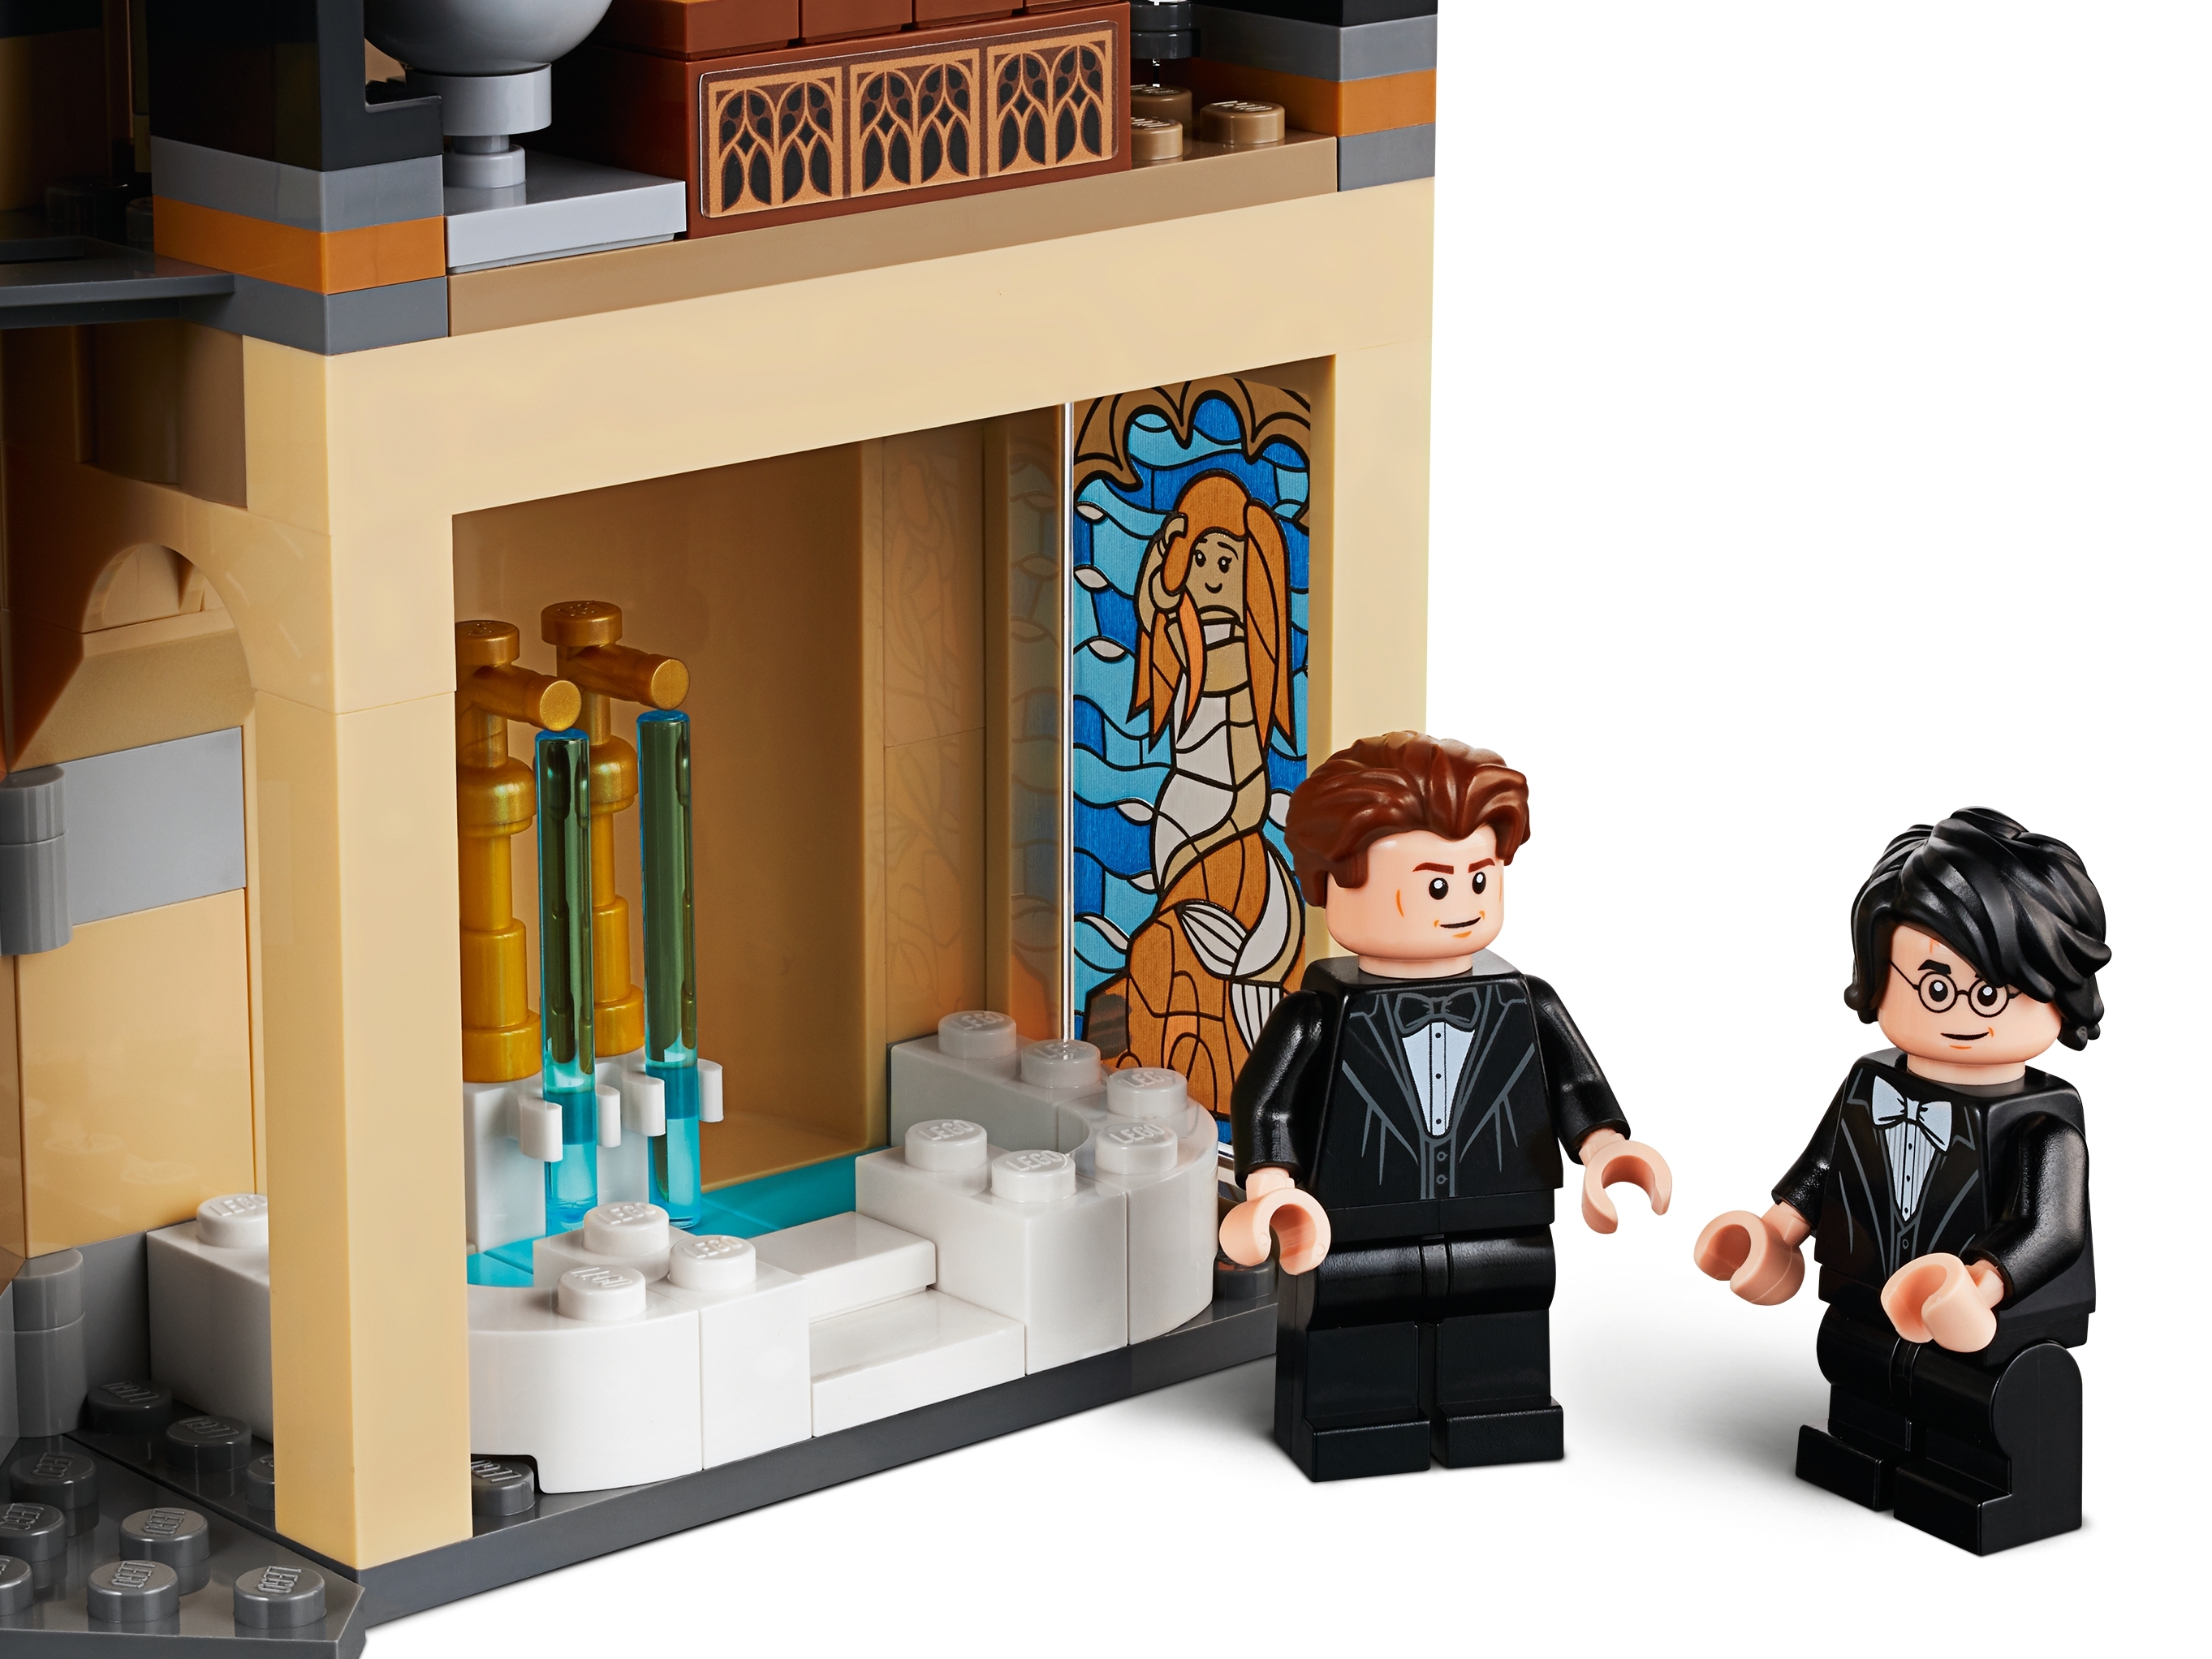 LEGO® Harry Potter 75948 La tour de l'horloge de Poudlard - Lego